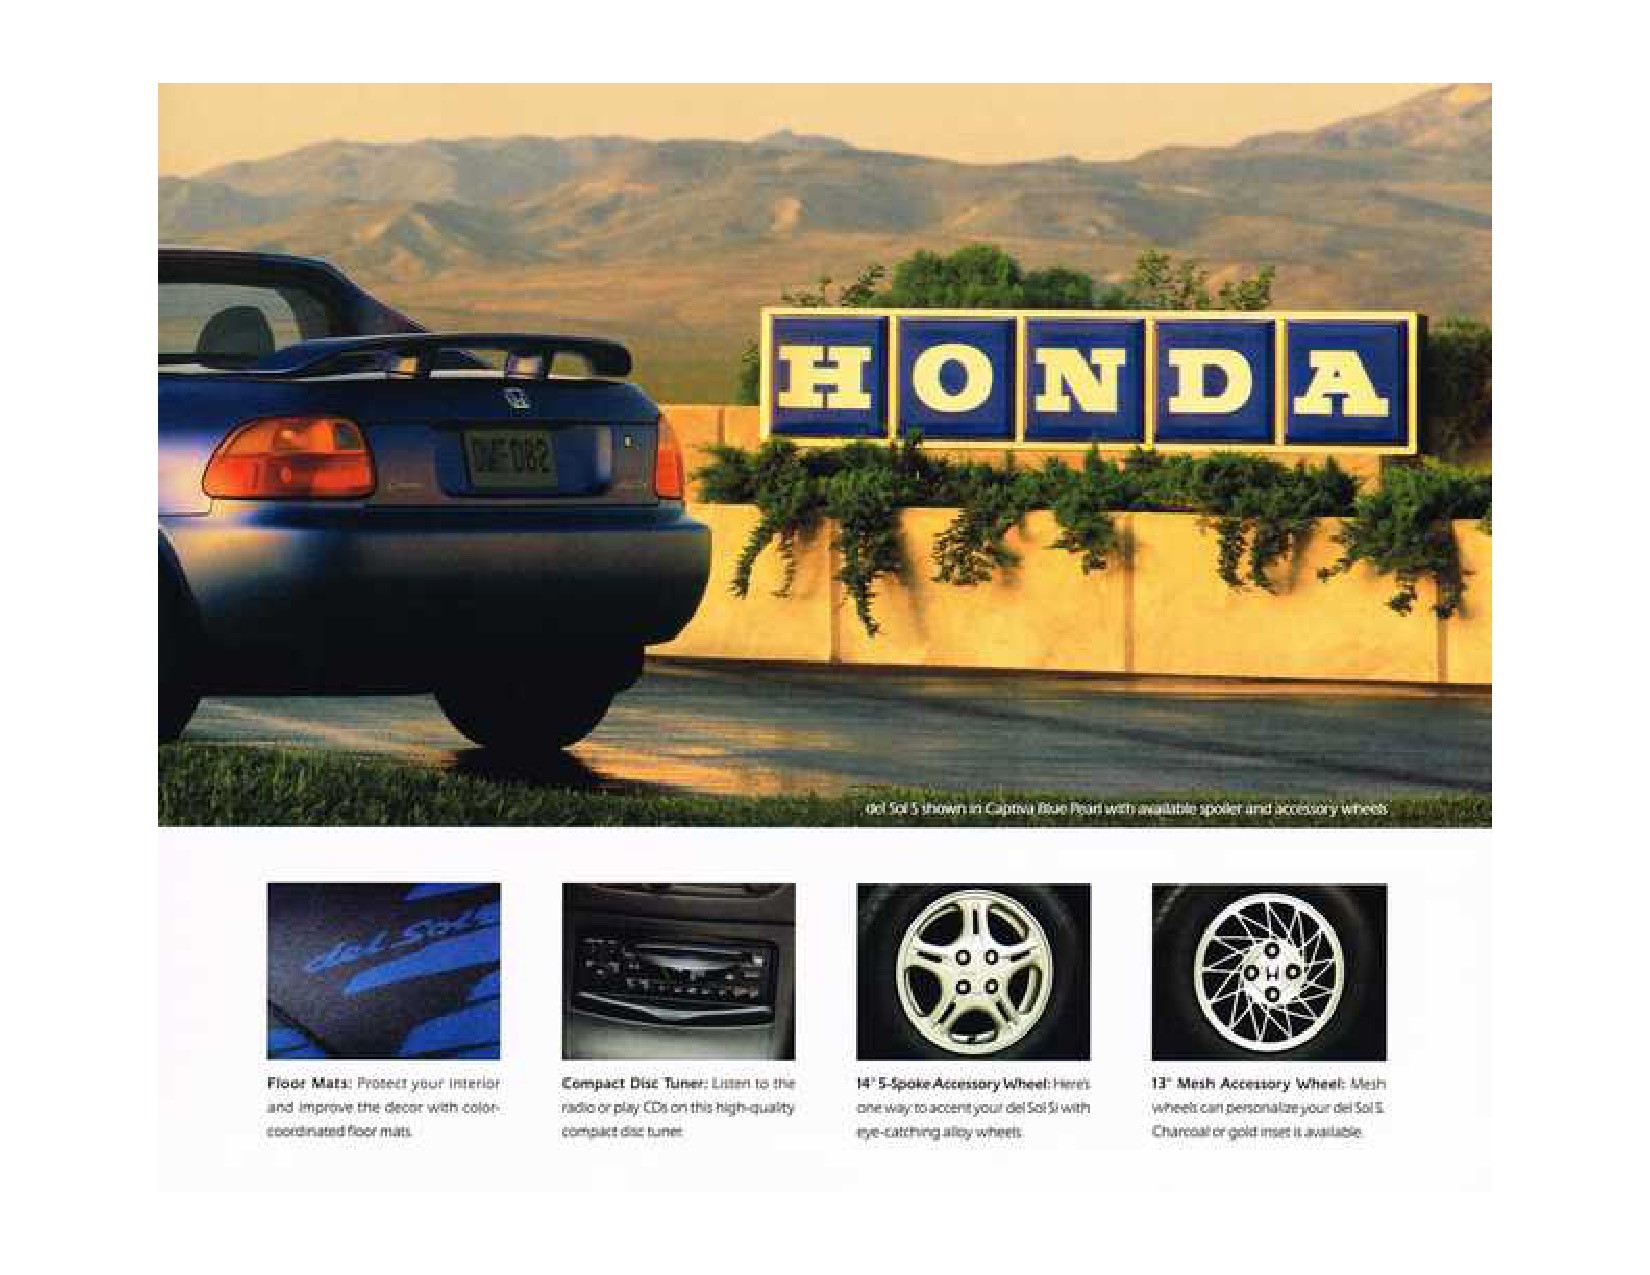 1993 Honda Civic delSol Brochure Page 1